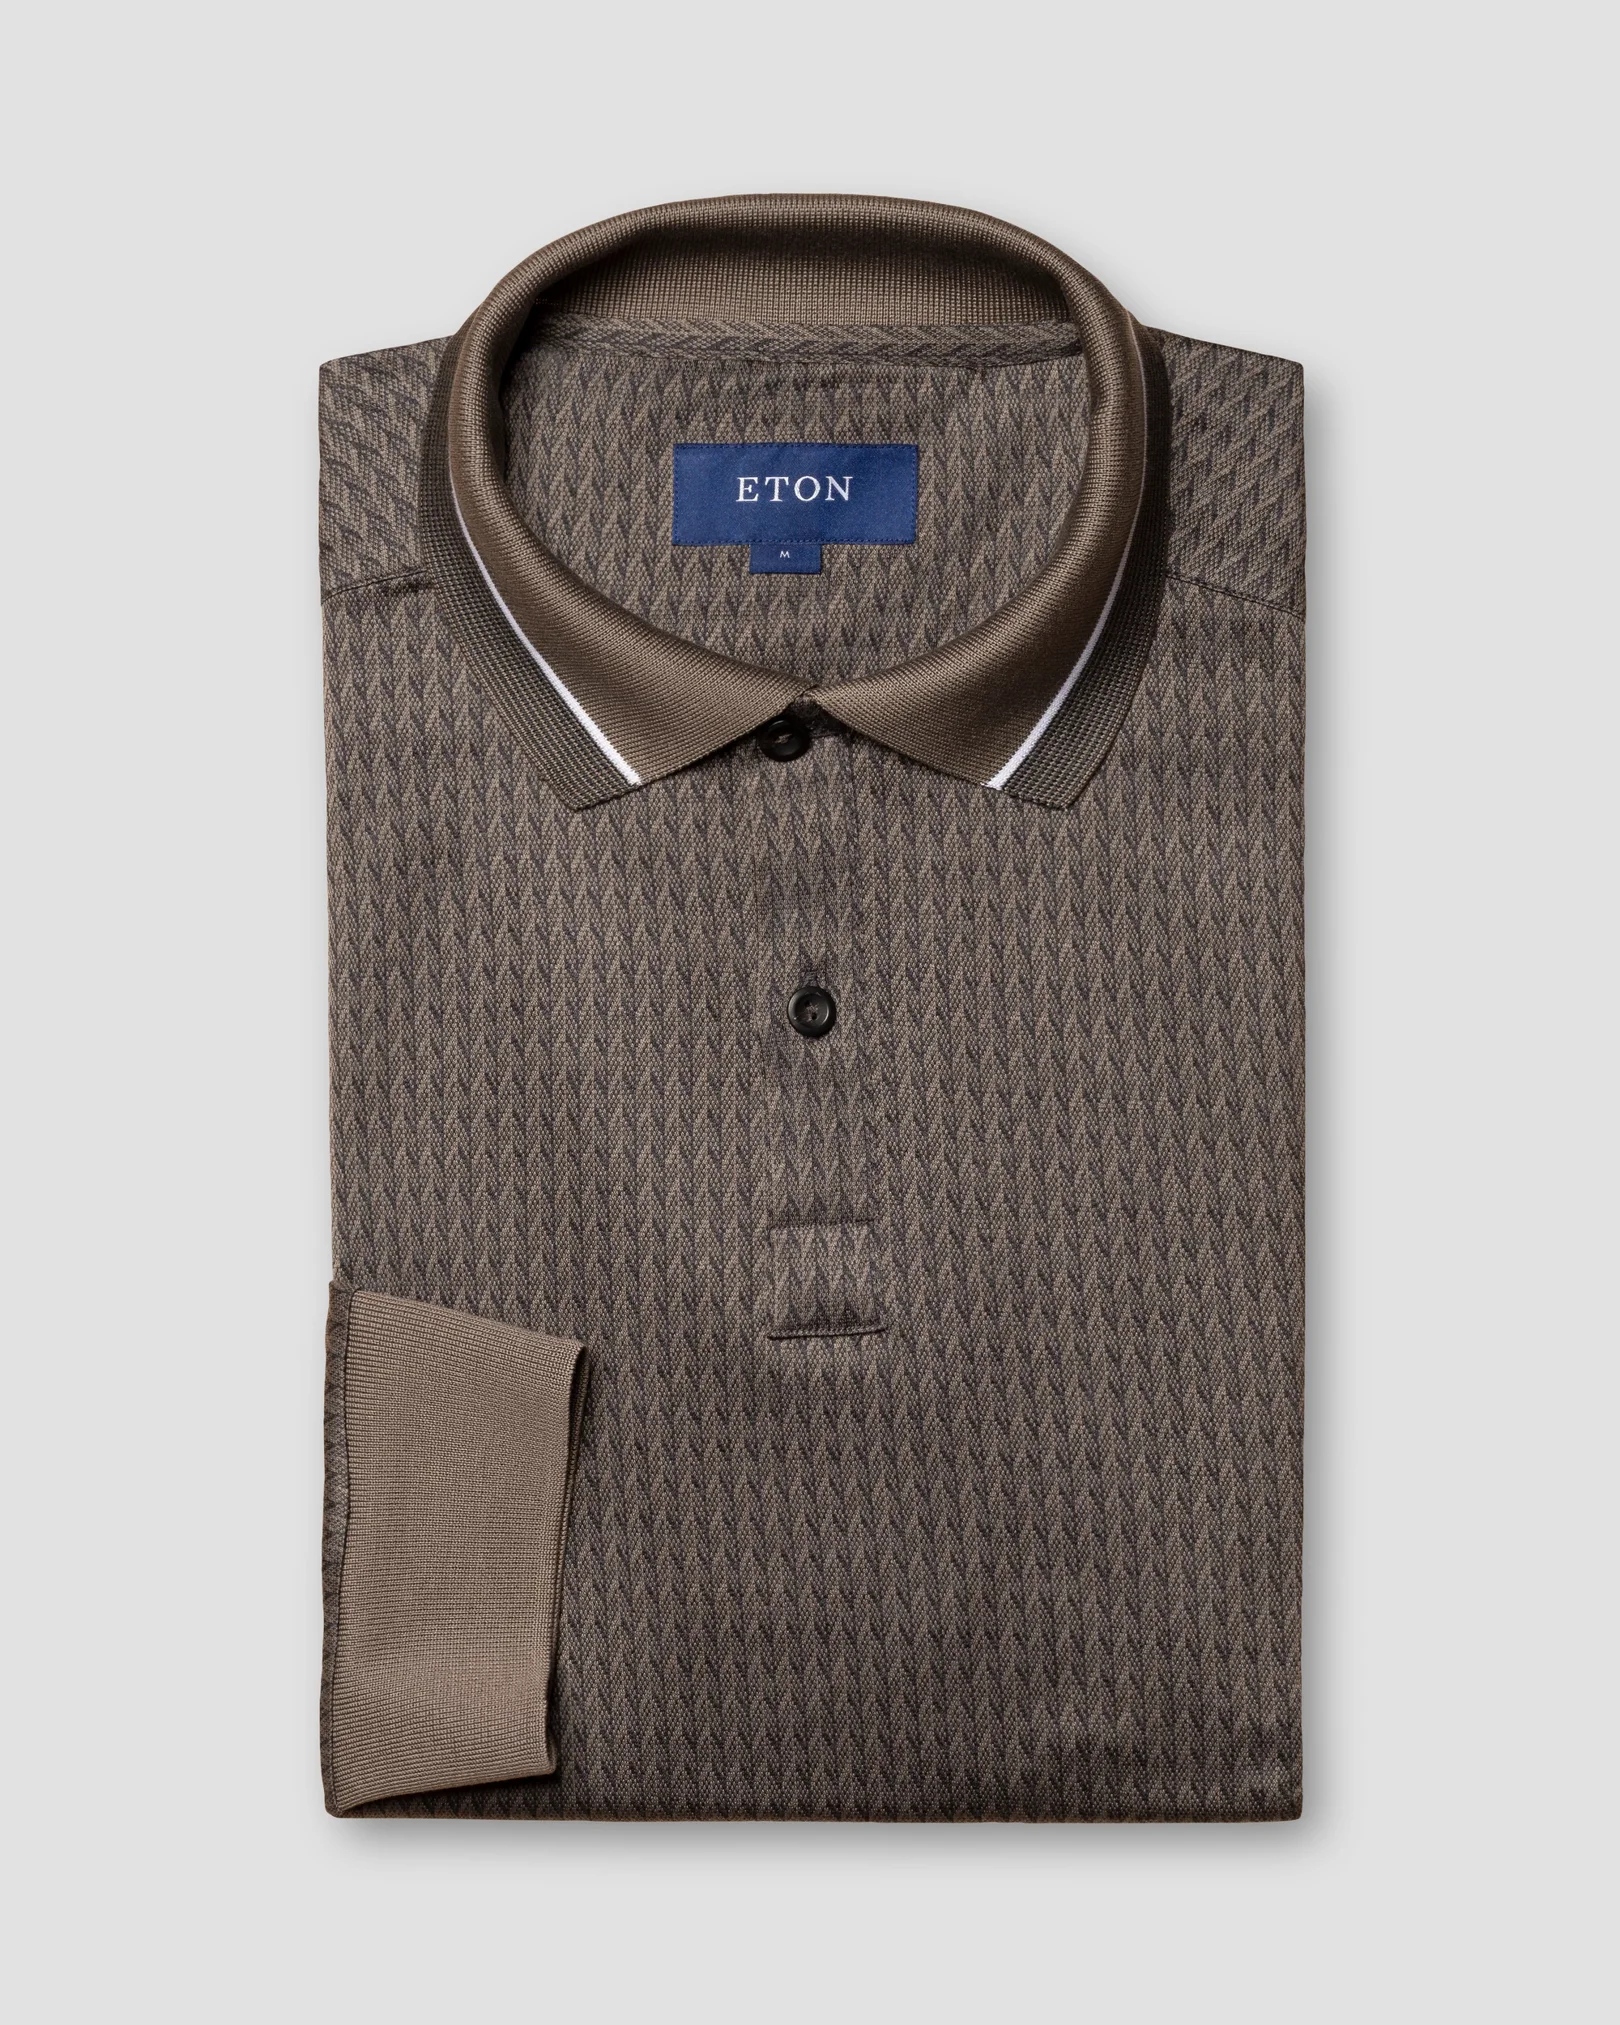 Eton - mid grey jacquard knit